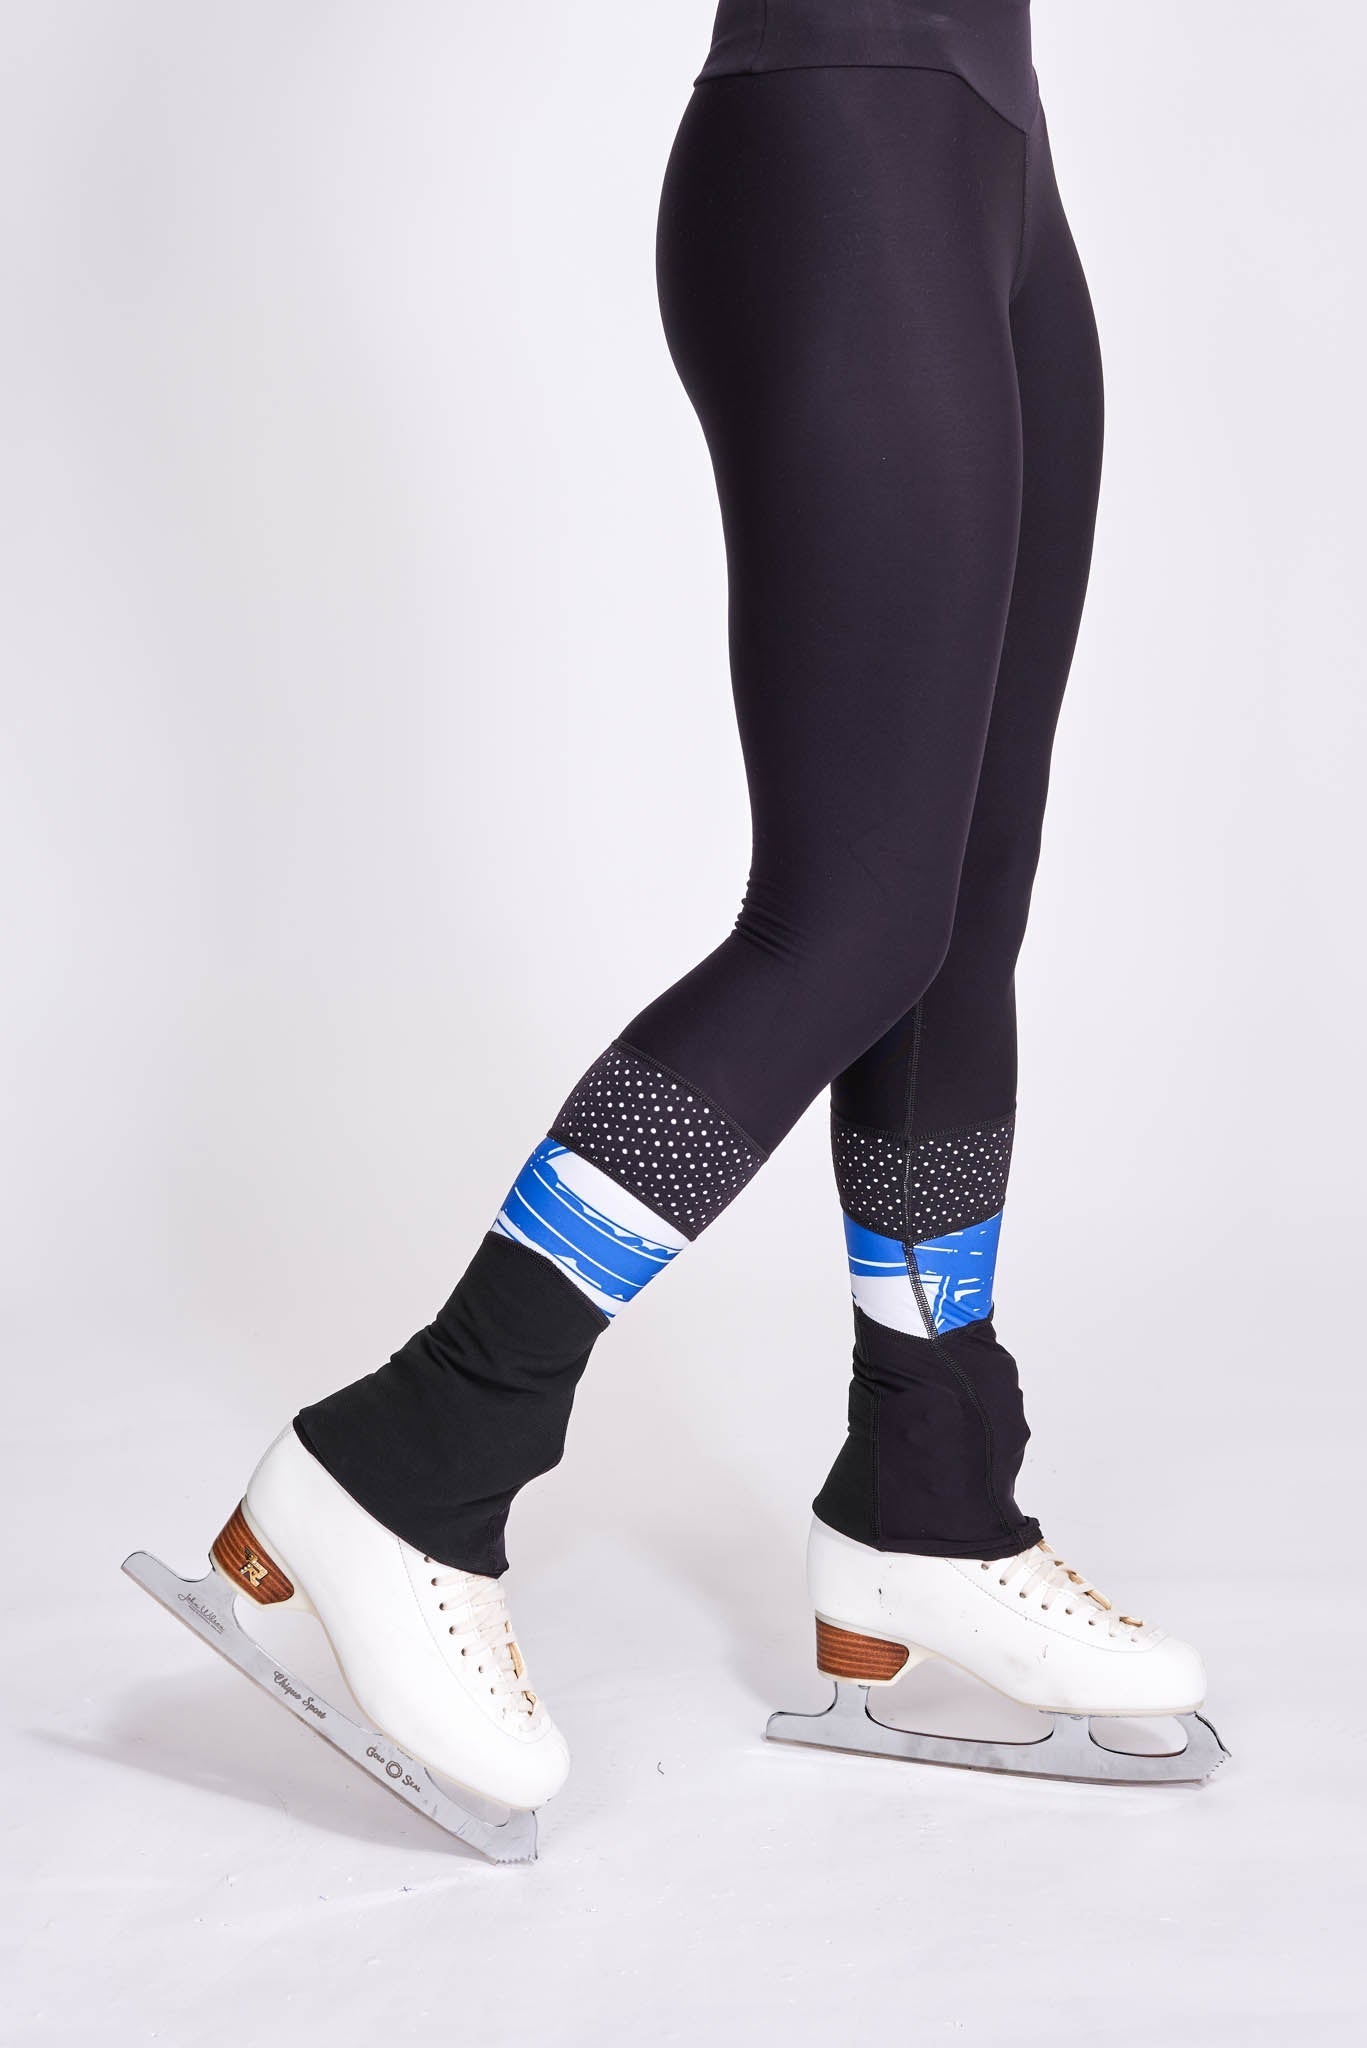 High Waisted Figure Skating Pants Tights for Women,Soft Elastic Tummy  Control Ice Skating Leggings Gymnastics Leotard(Size:XXXL,Color:12)